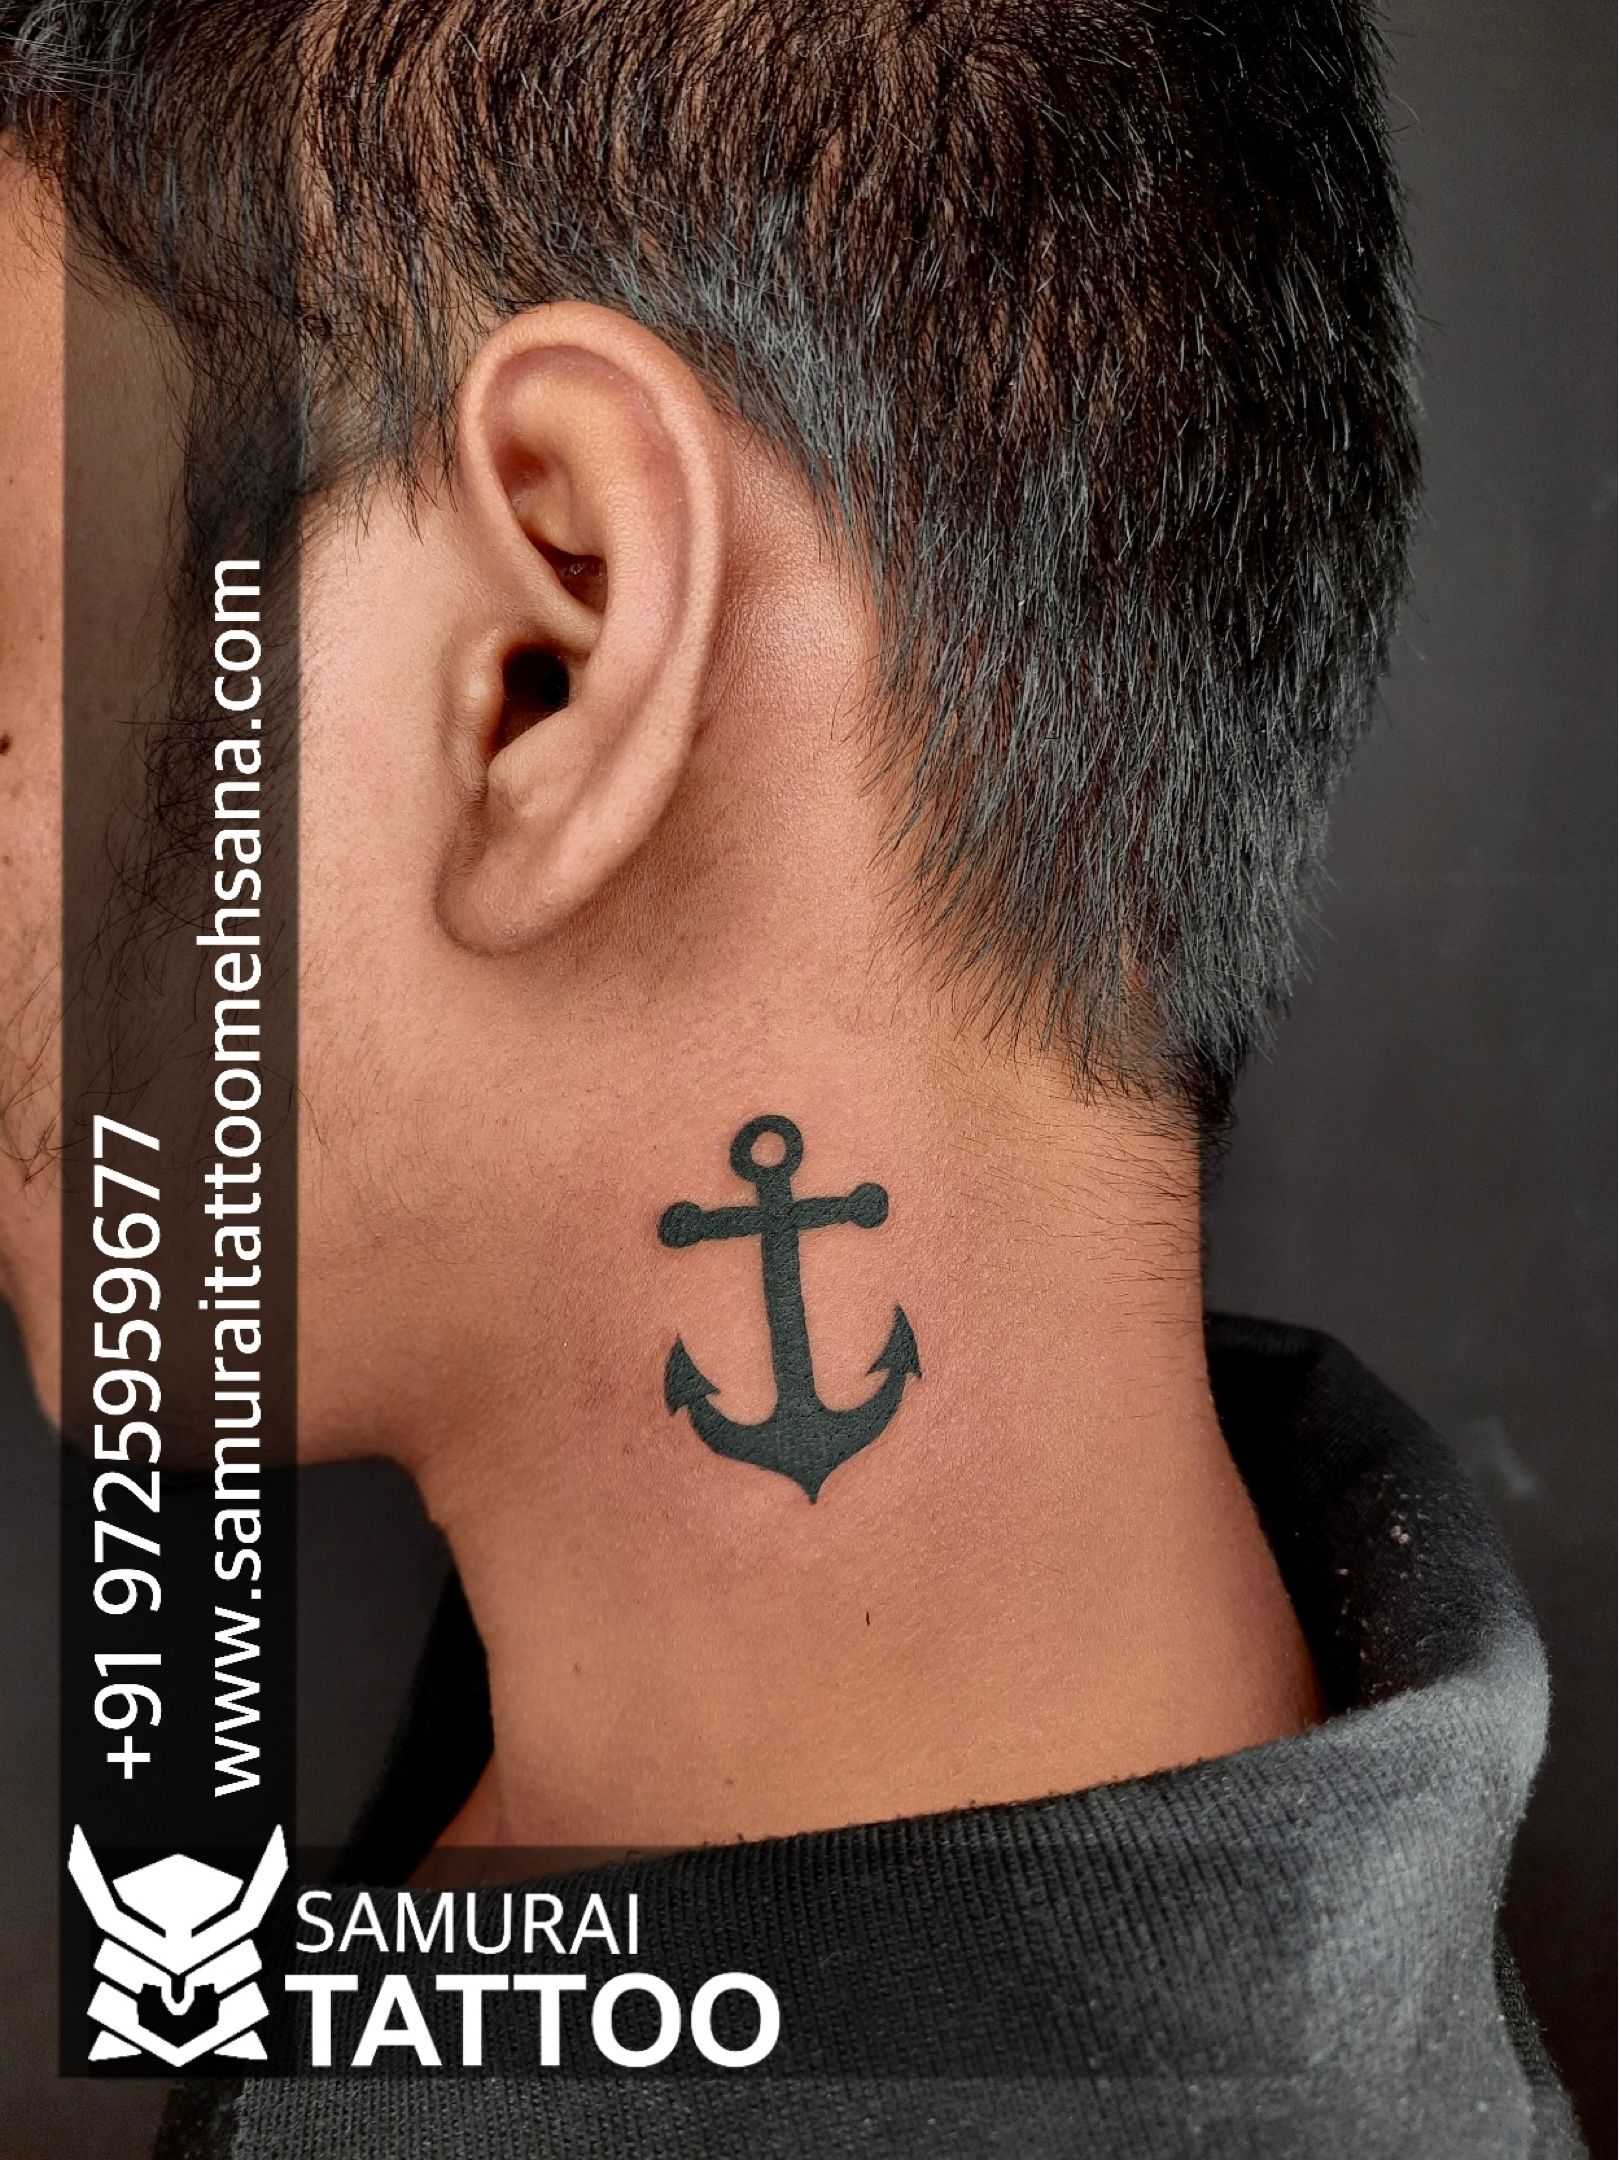 Tattoo uploaded by Vipul Chaudhary • Anchore tattoo |Anchore tattoo design  |Anchore tattoo idea |tattoo for boys |Neck tattoo • Tattoodo